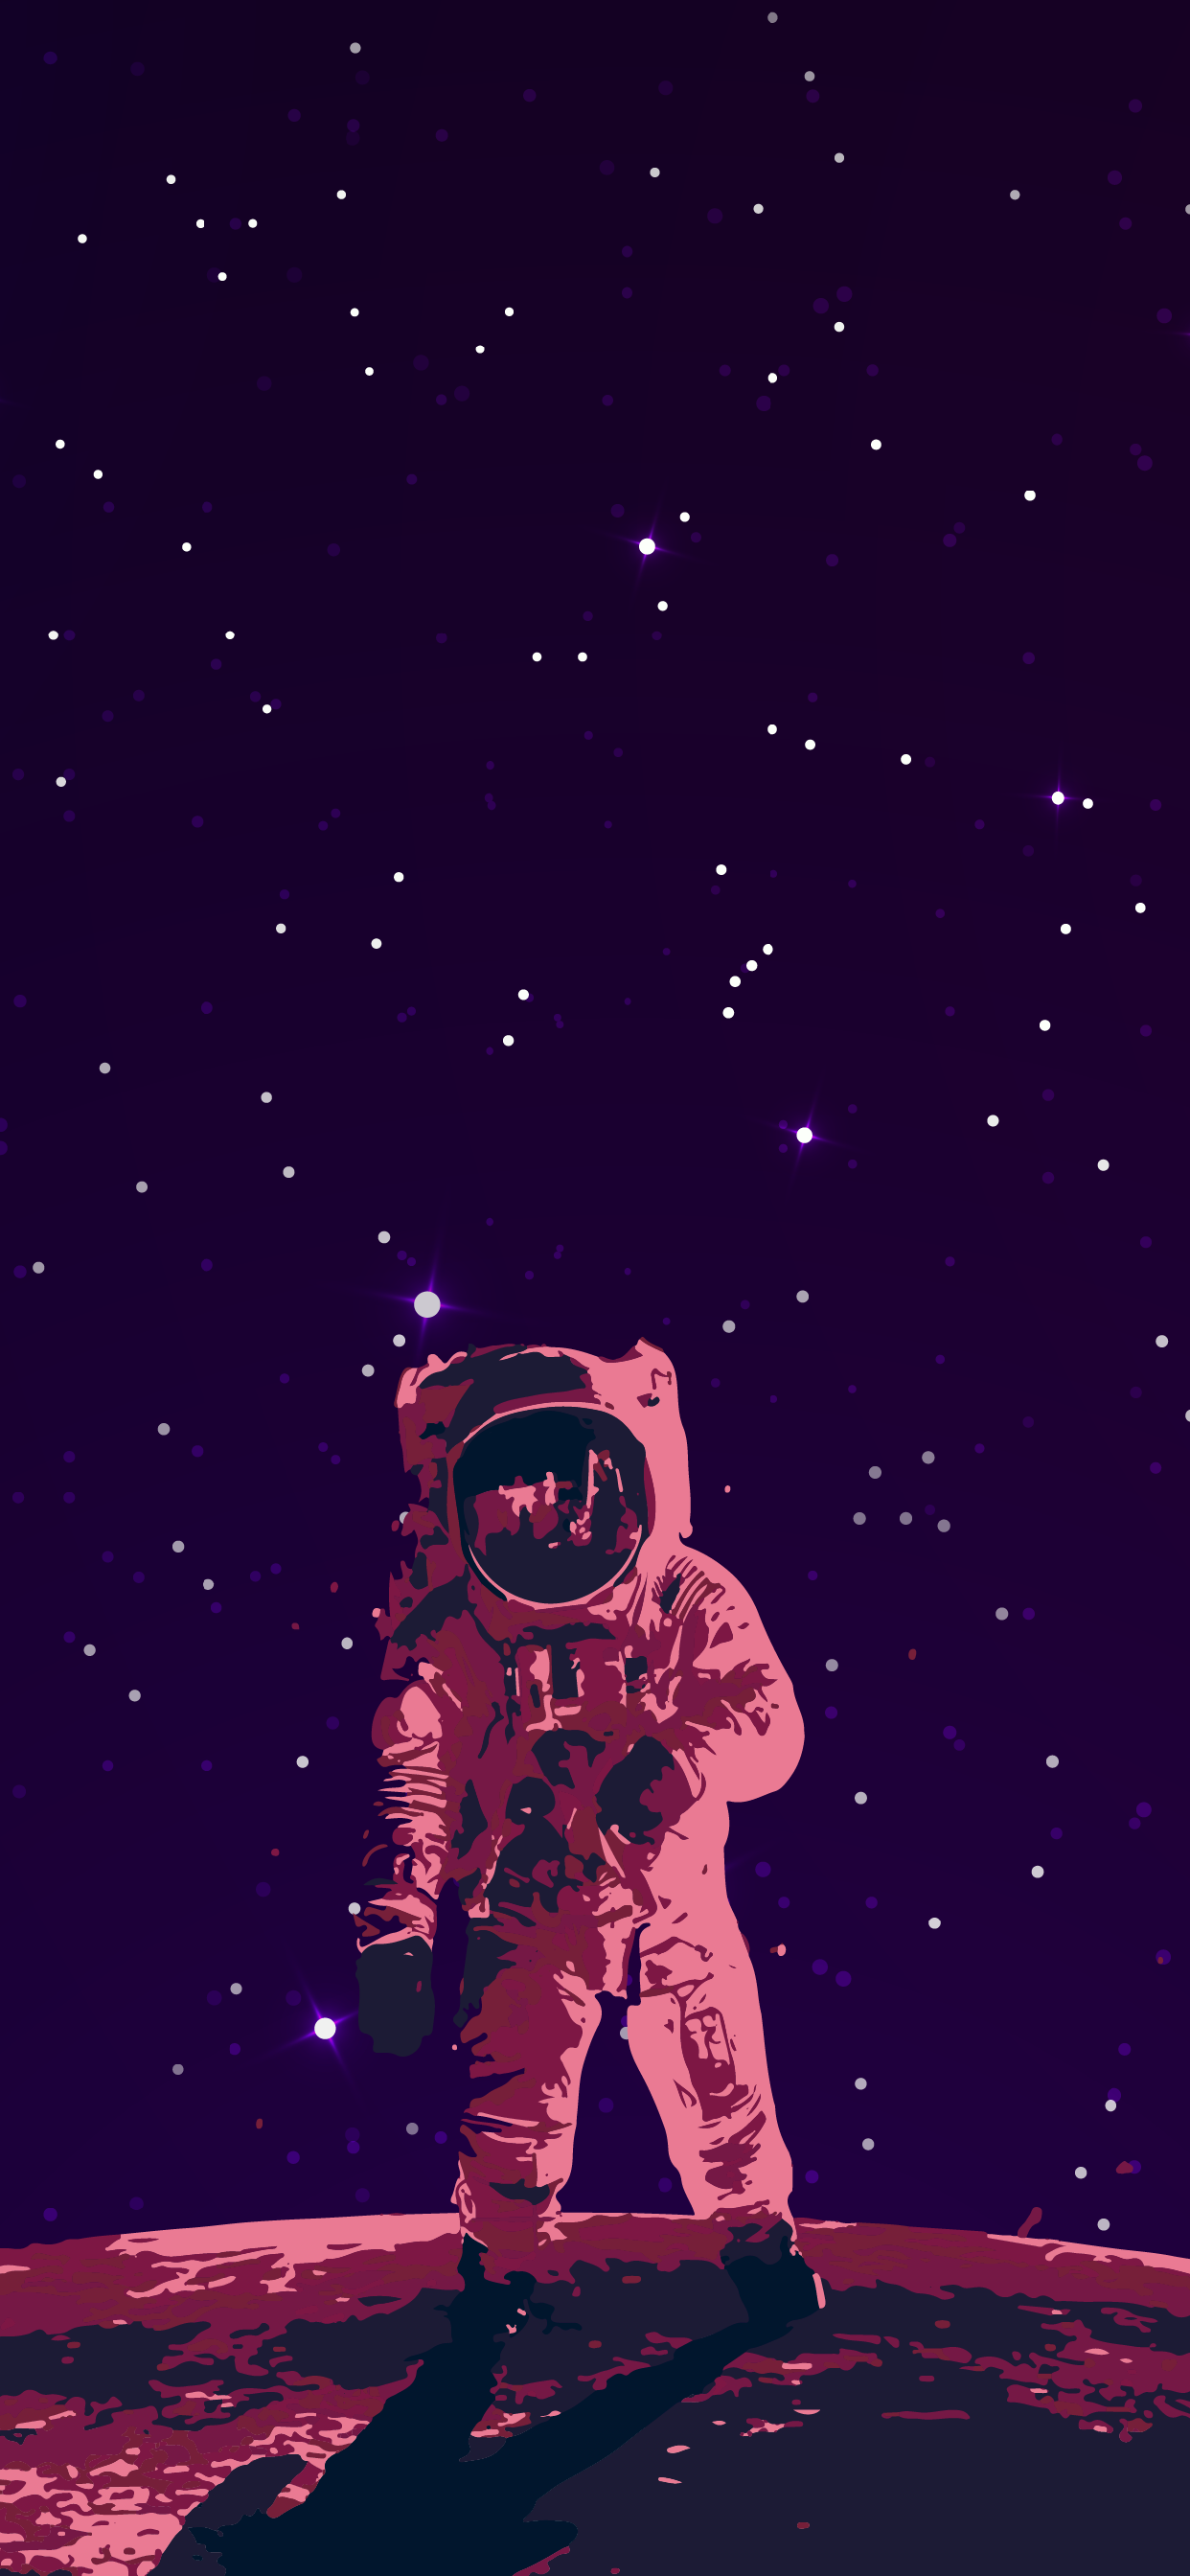 Aesthetic astronaut